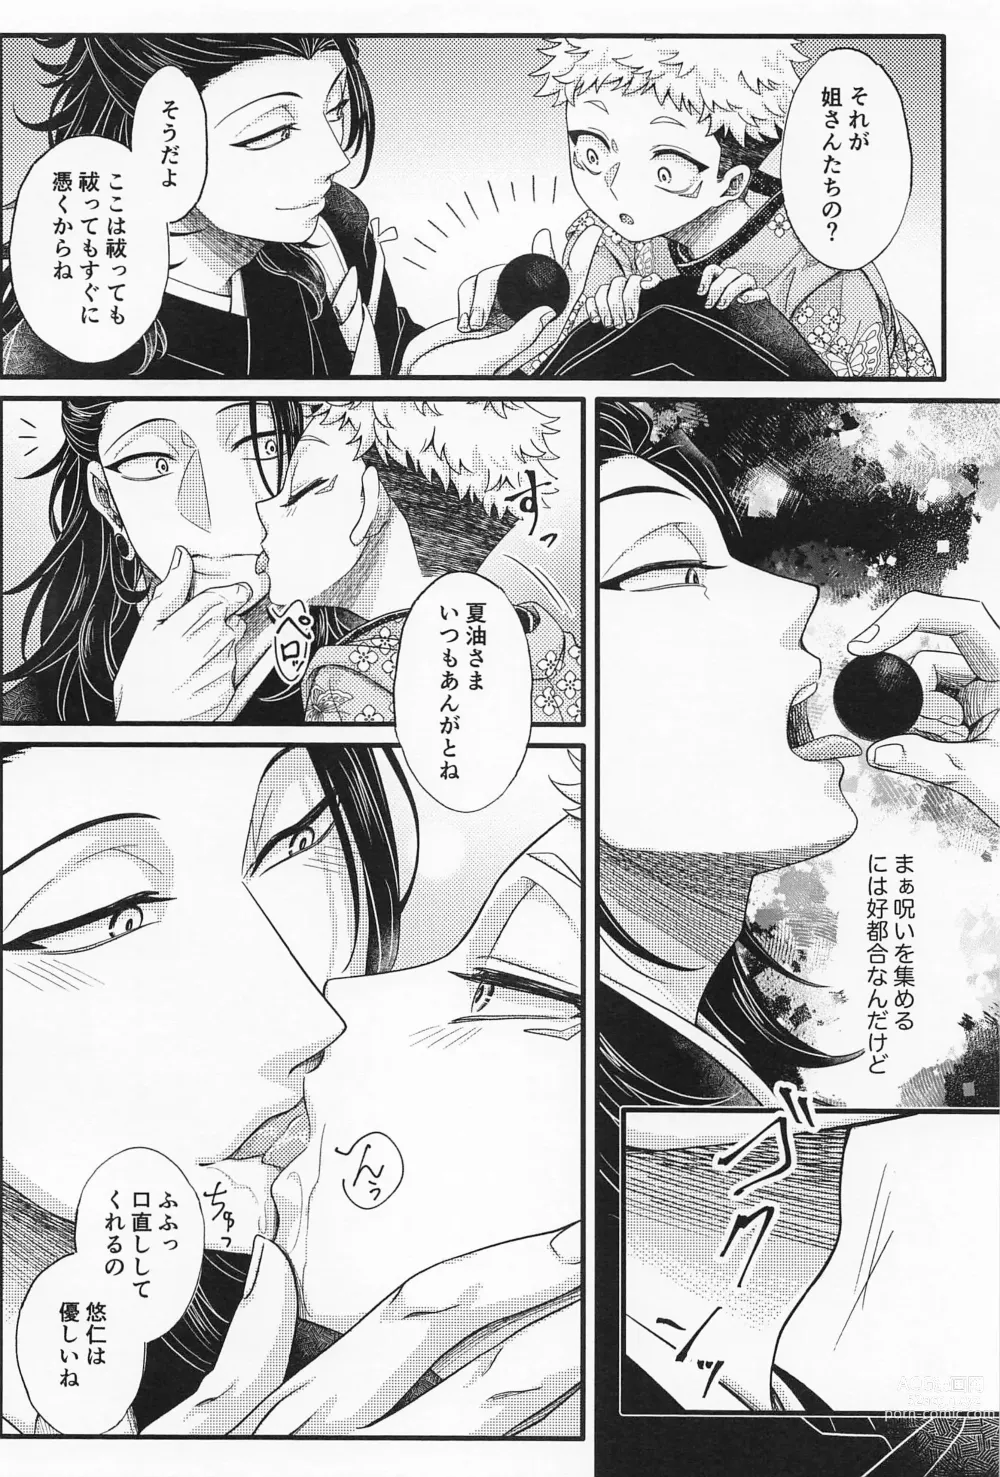 Page 5 of doujinshi Tamayura no.